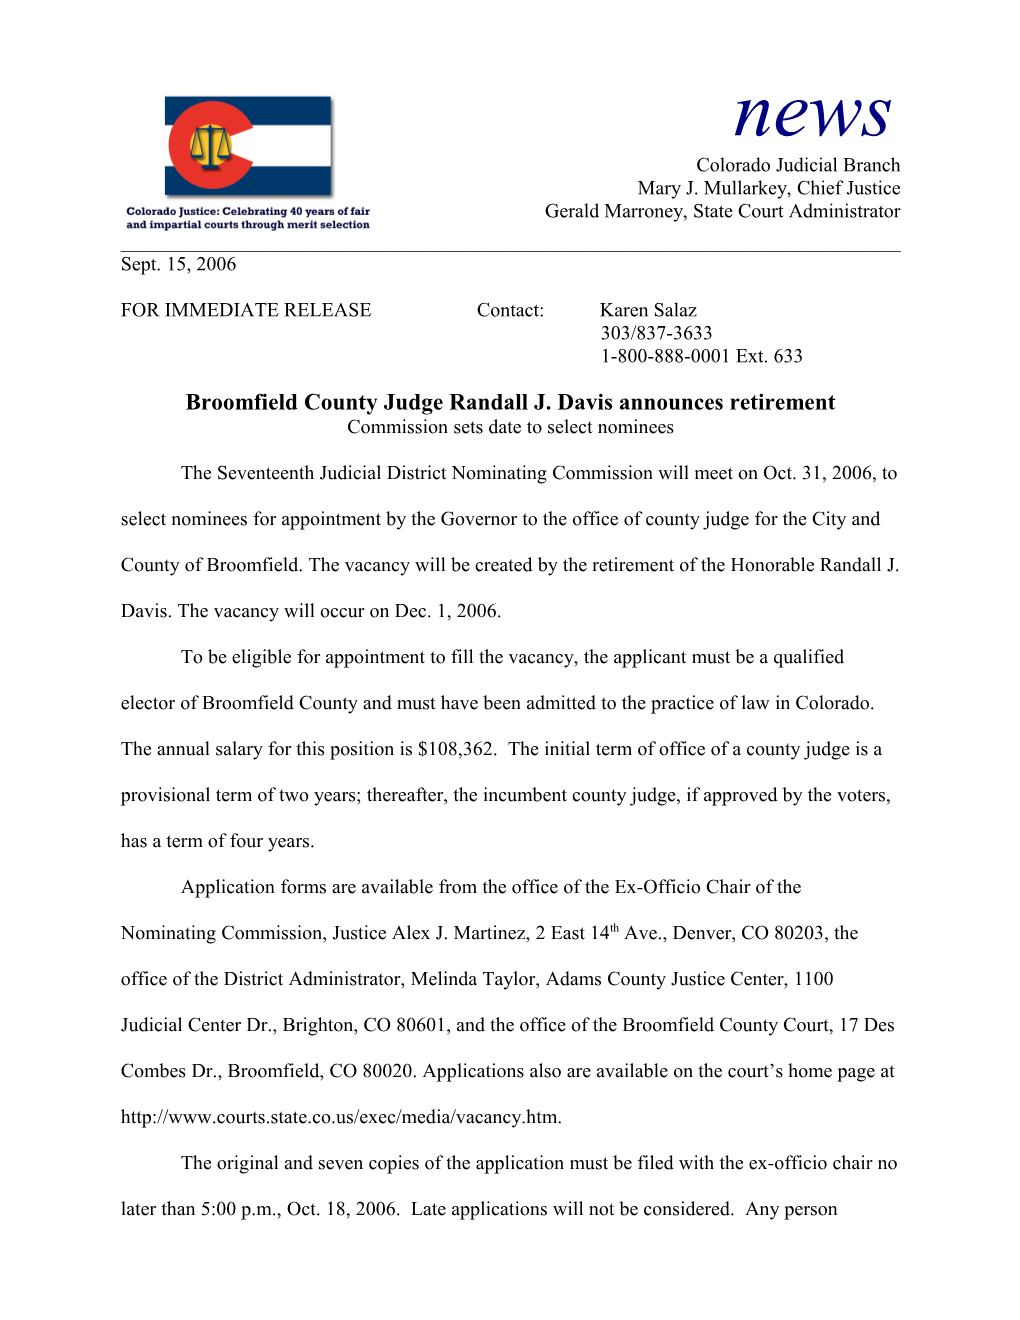 Broomfield County Judge Randall J. Davis Announces Retirement